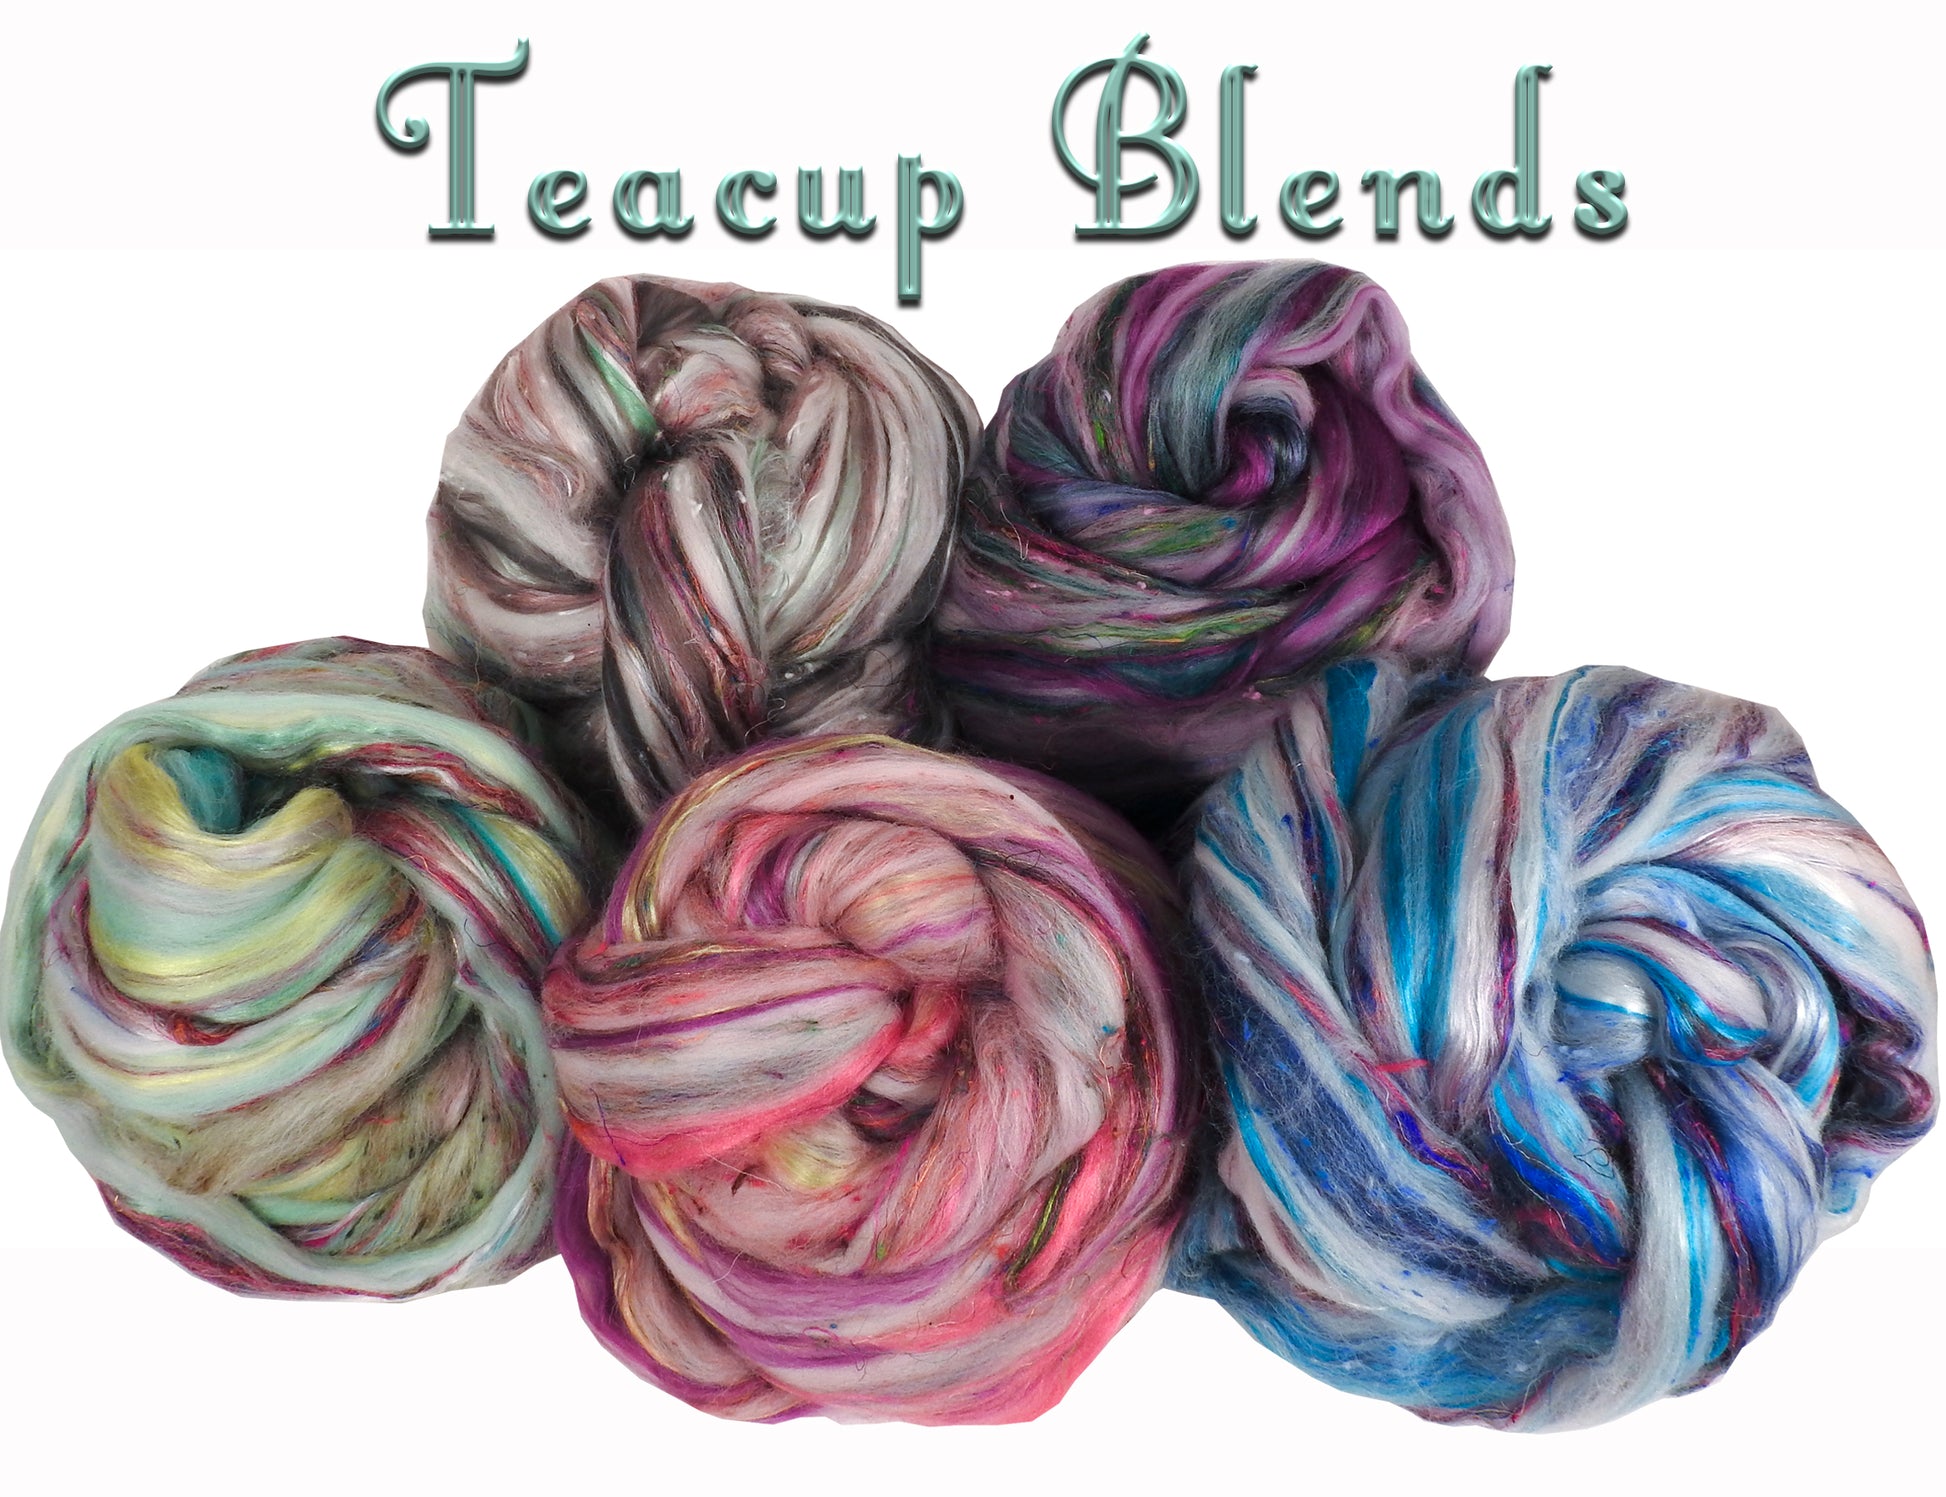 Lily of the Valley Teacup - Custom Blended Top - Superfine Merino/Mulberry Silk Bamboo/Sari Silk/Tweed Blend (40/25/15/10/10) - Inglenook Fibers